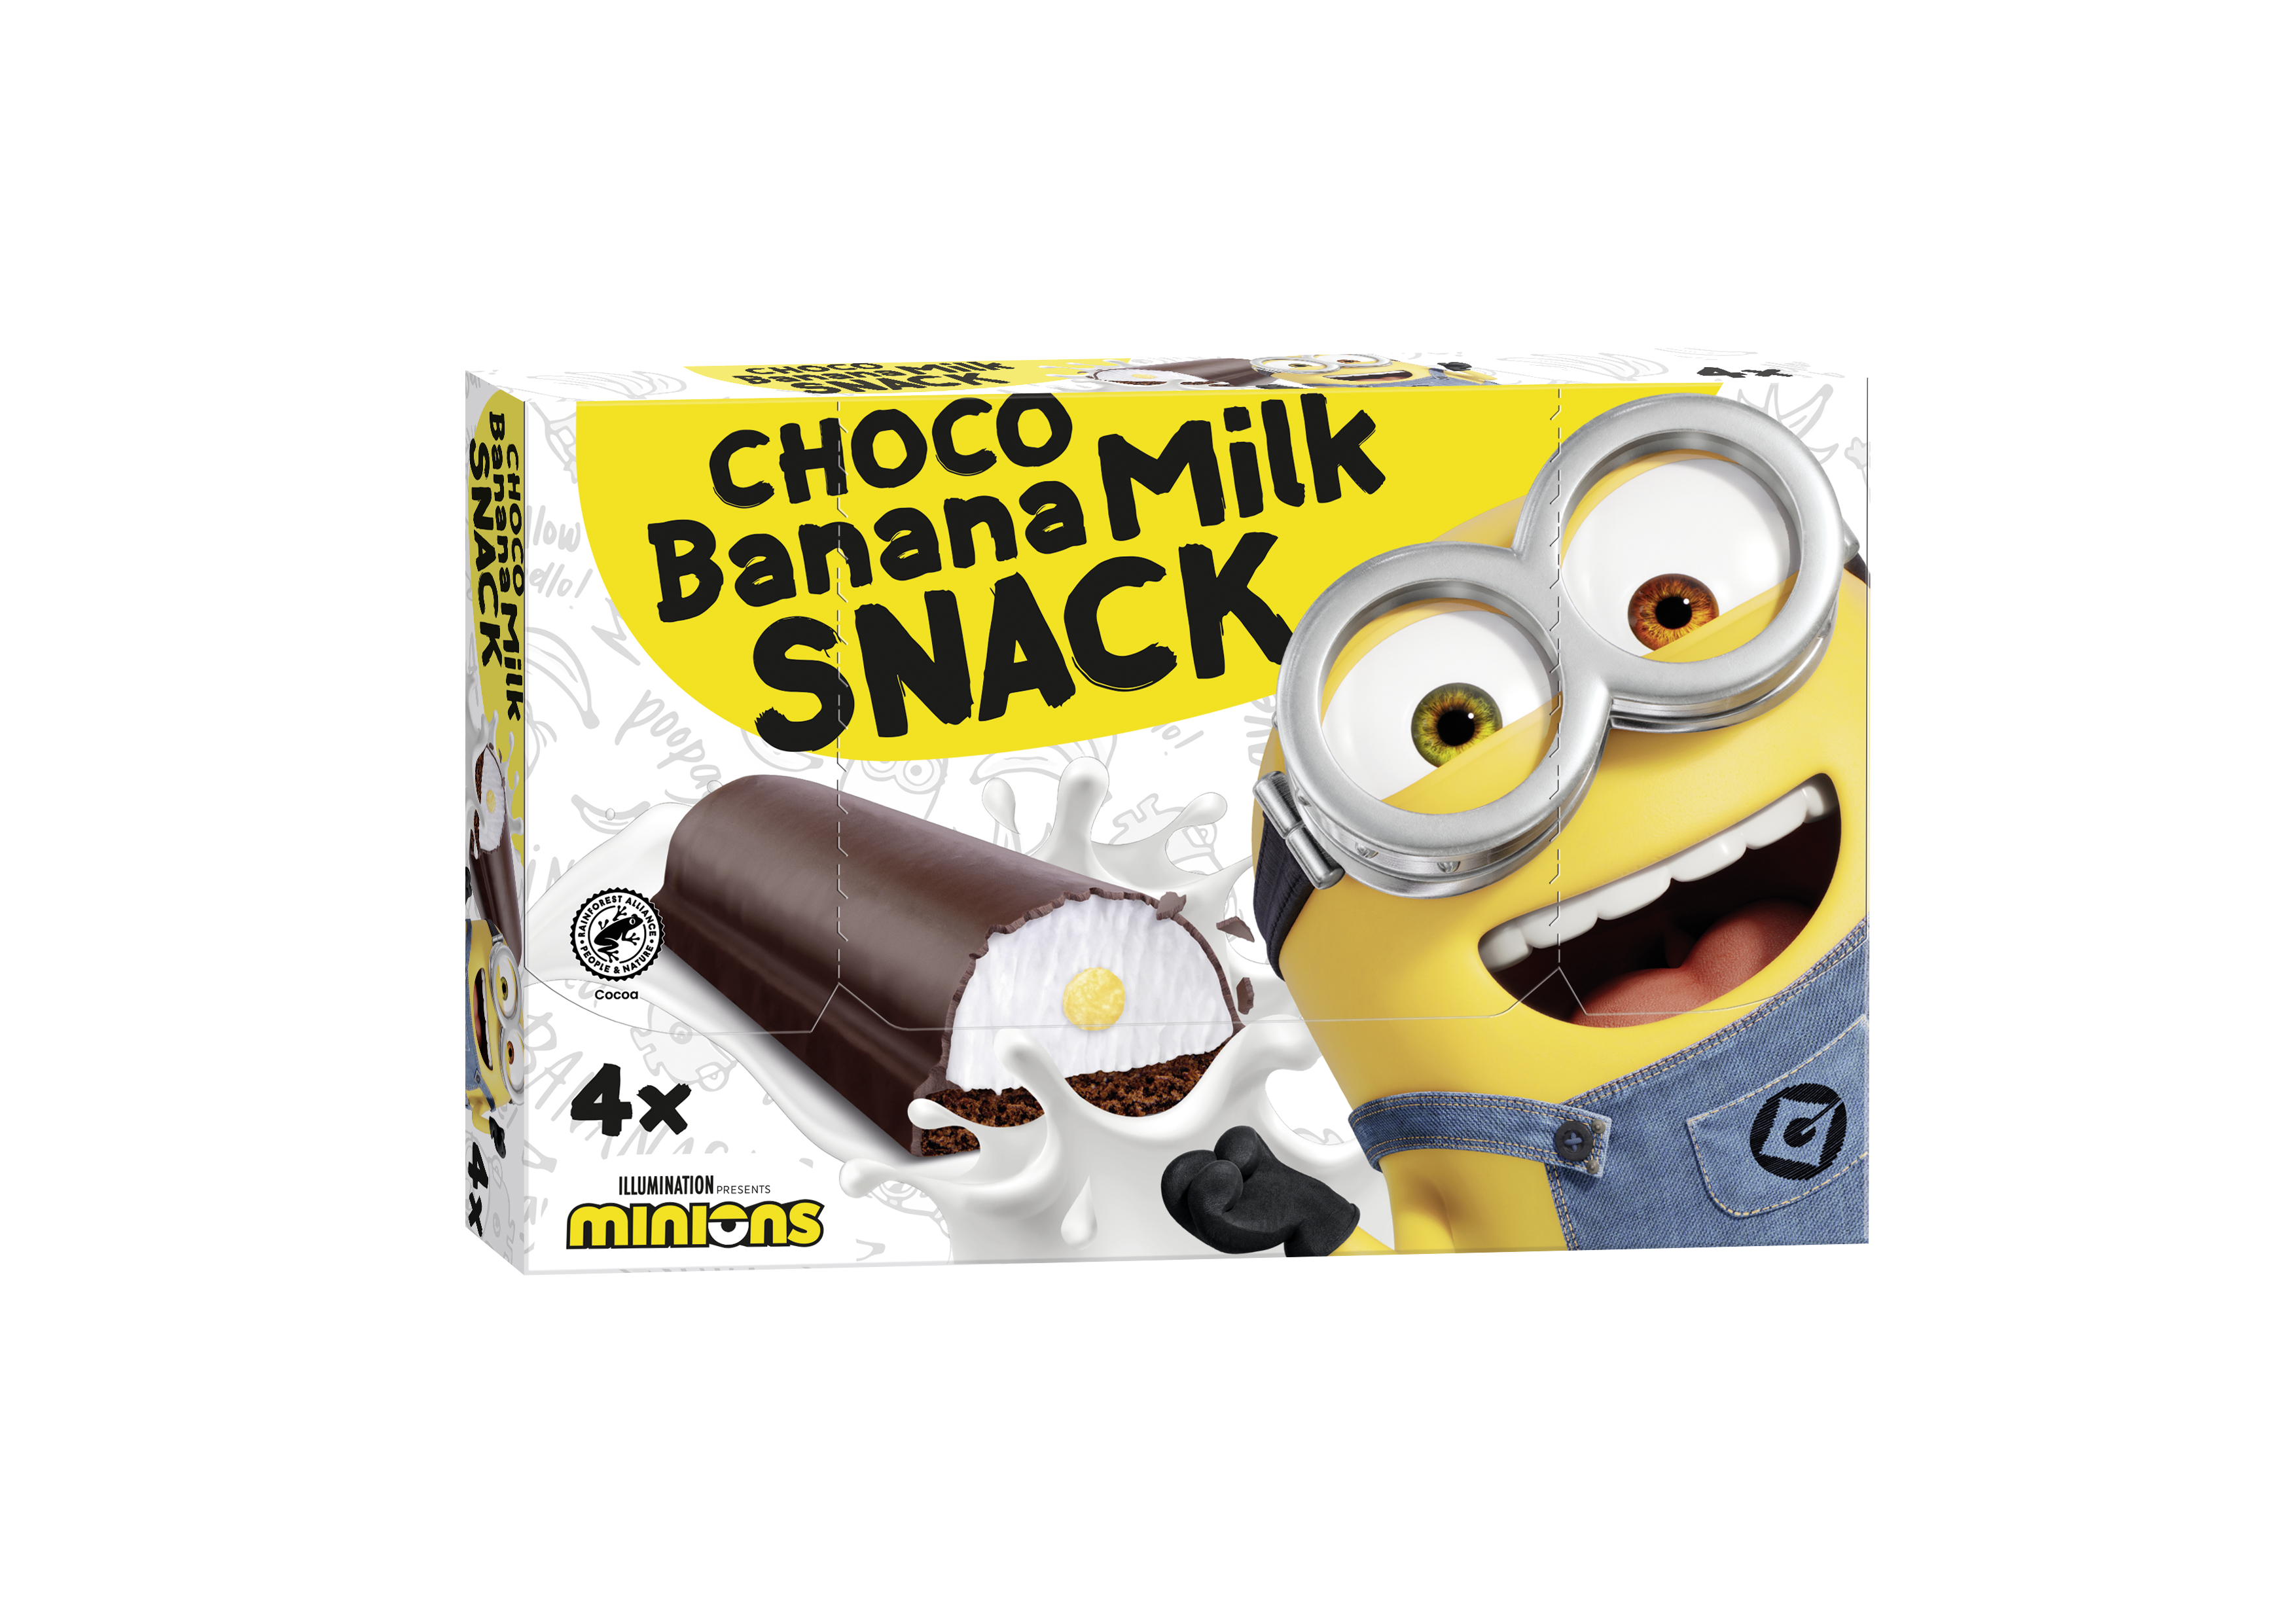 packshot_minions_choco banana snack_CBB4x27g_300dpi